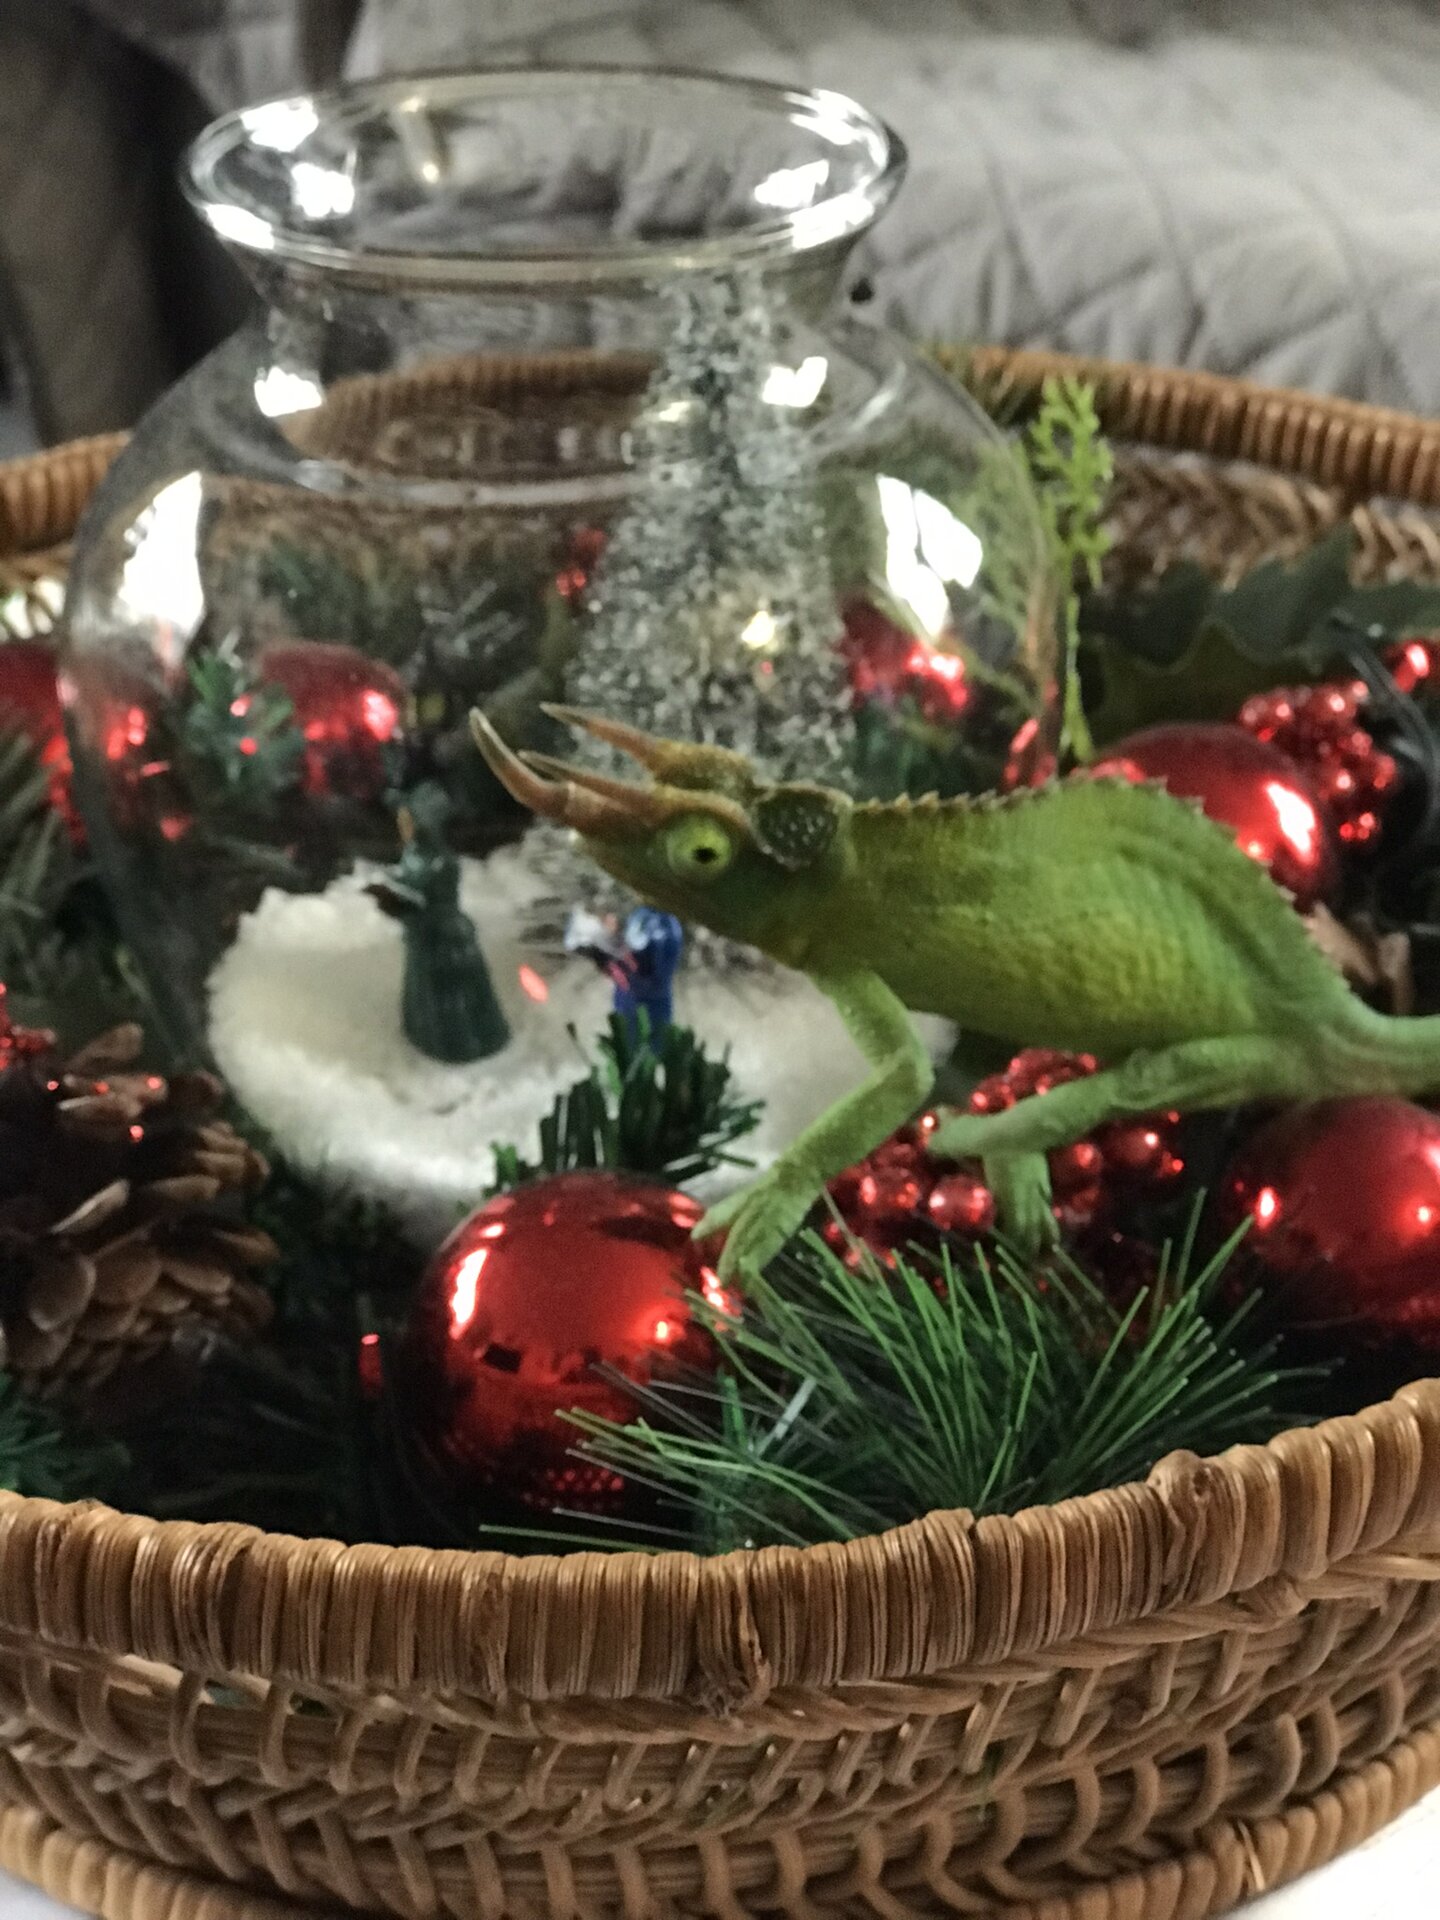 Eustis checking out the Christmas decor!